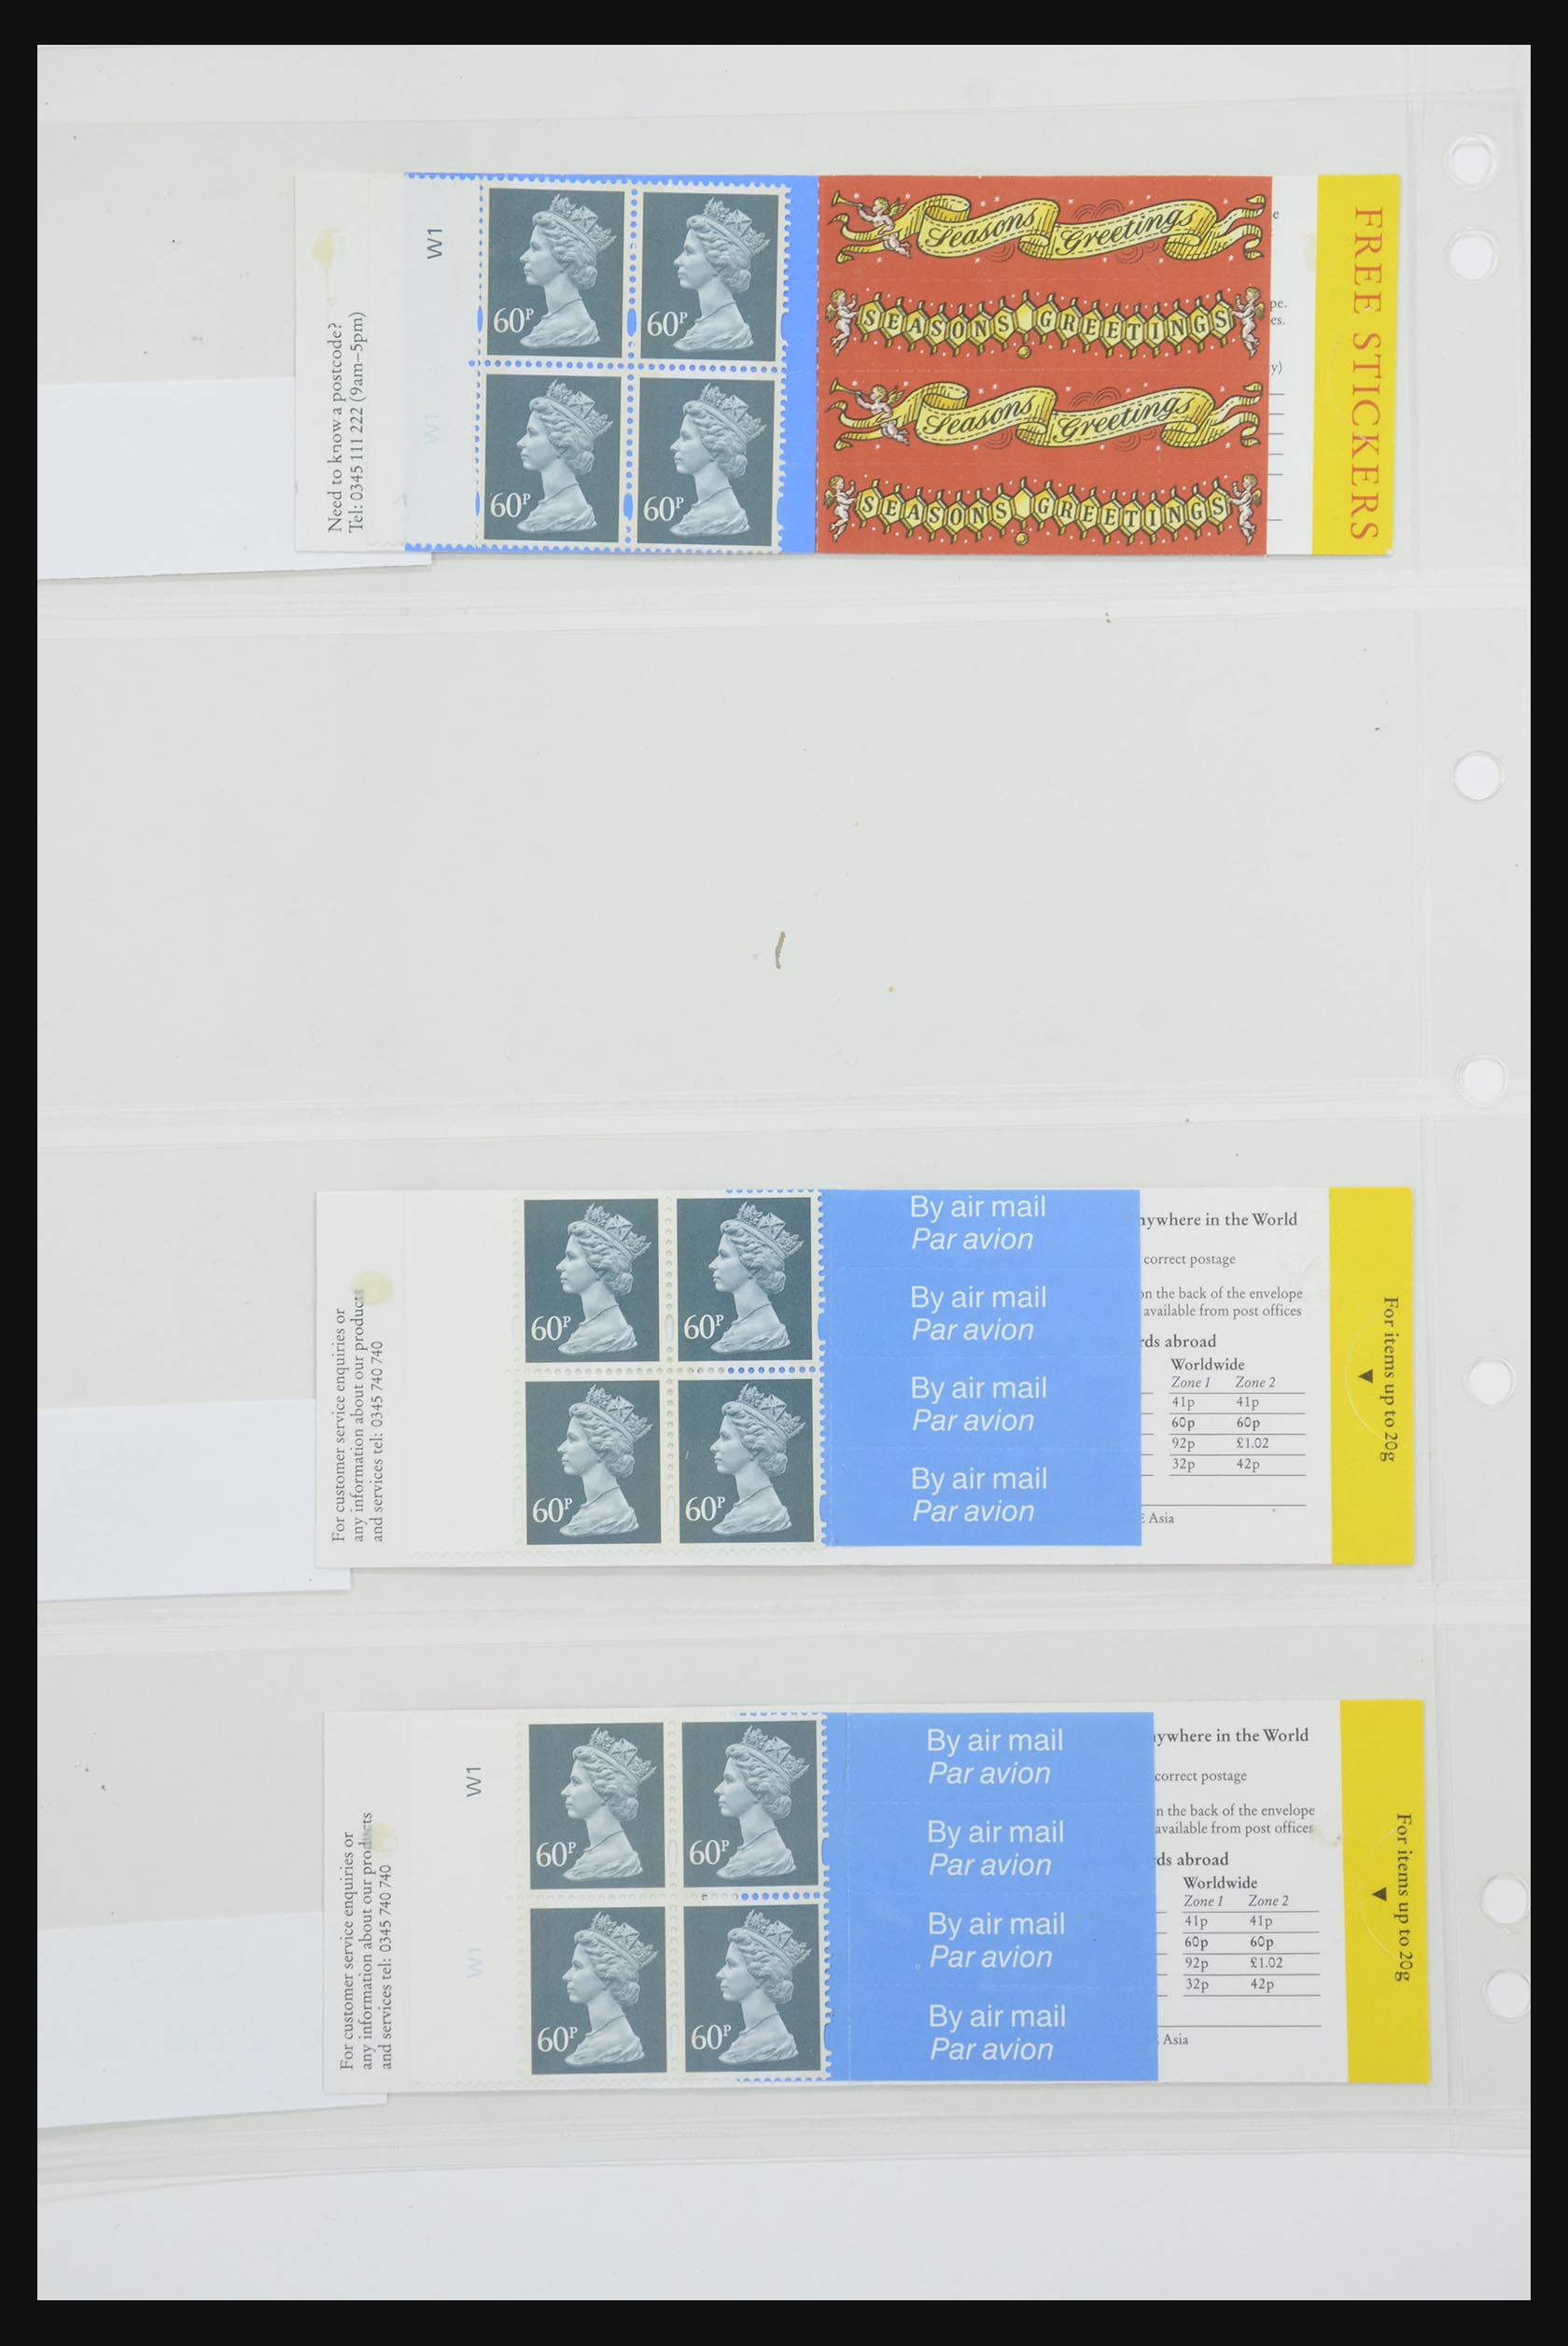 31959 078 - 31959 Great Britain stampbooklets 1987-2016!!